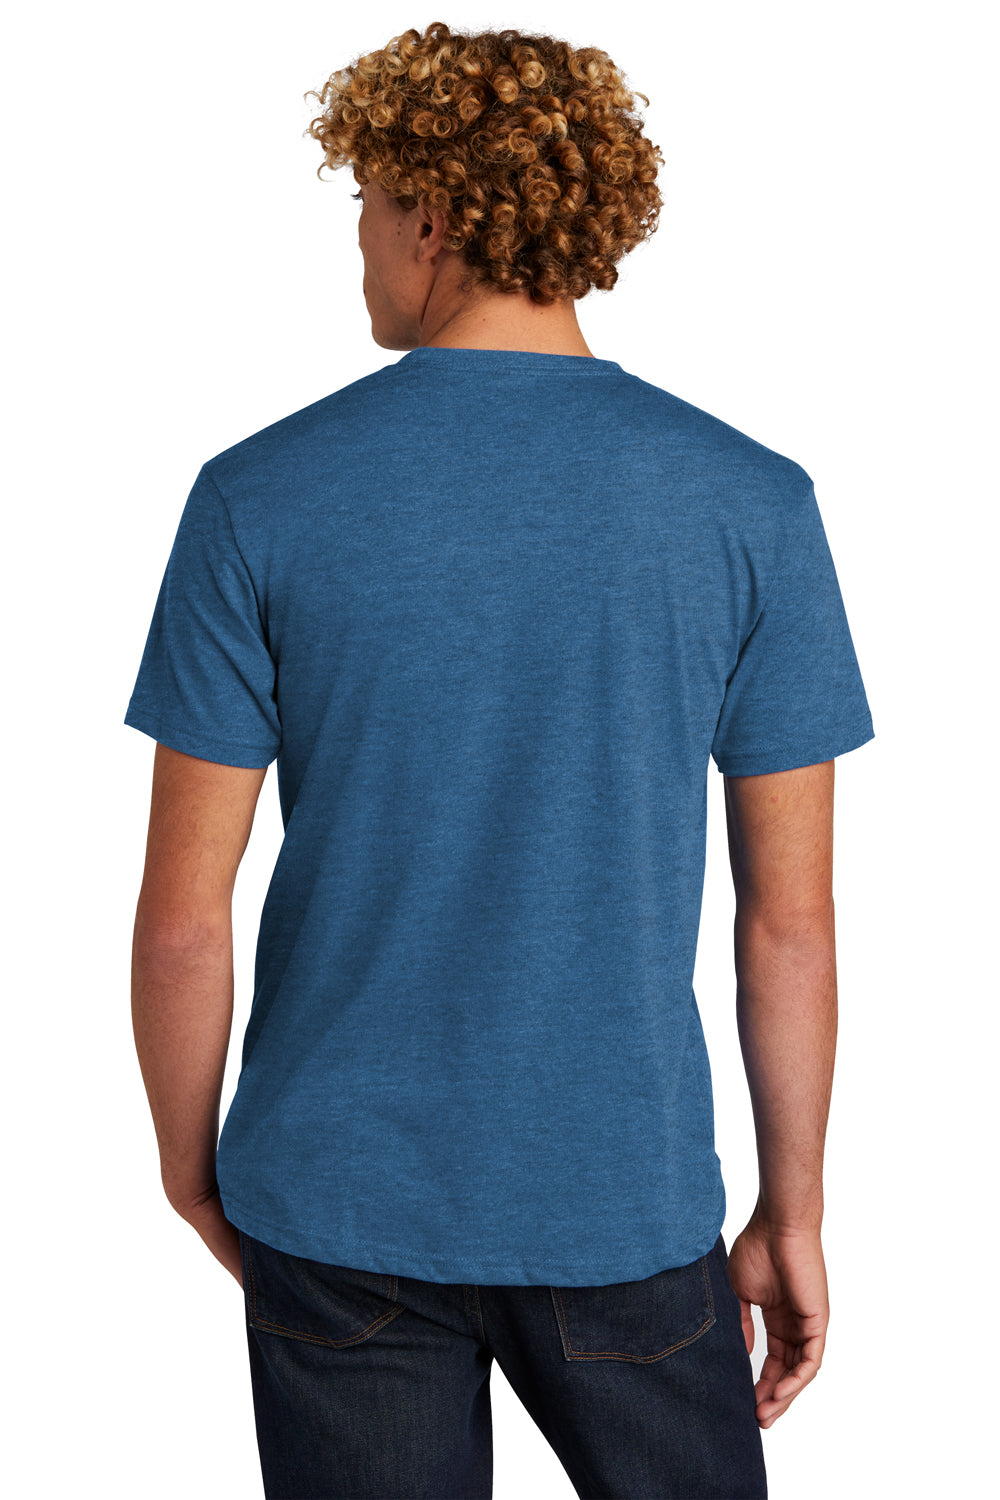 Next Level NL6210/N6210/6210 Mens CVC Jersey Short Sleeve Crewneck T-Shirt Heather Cool Blue Back